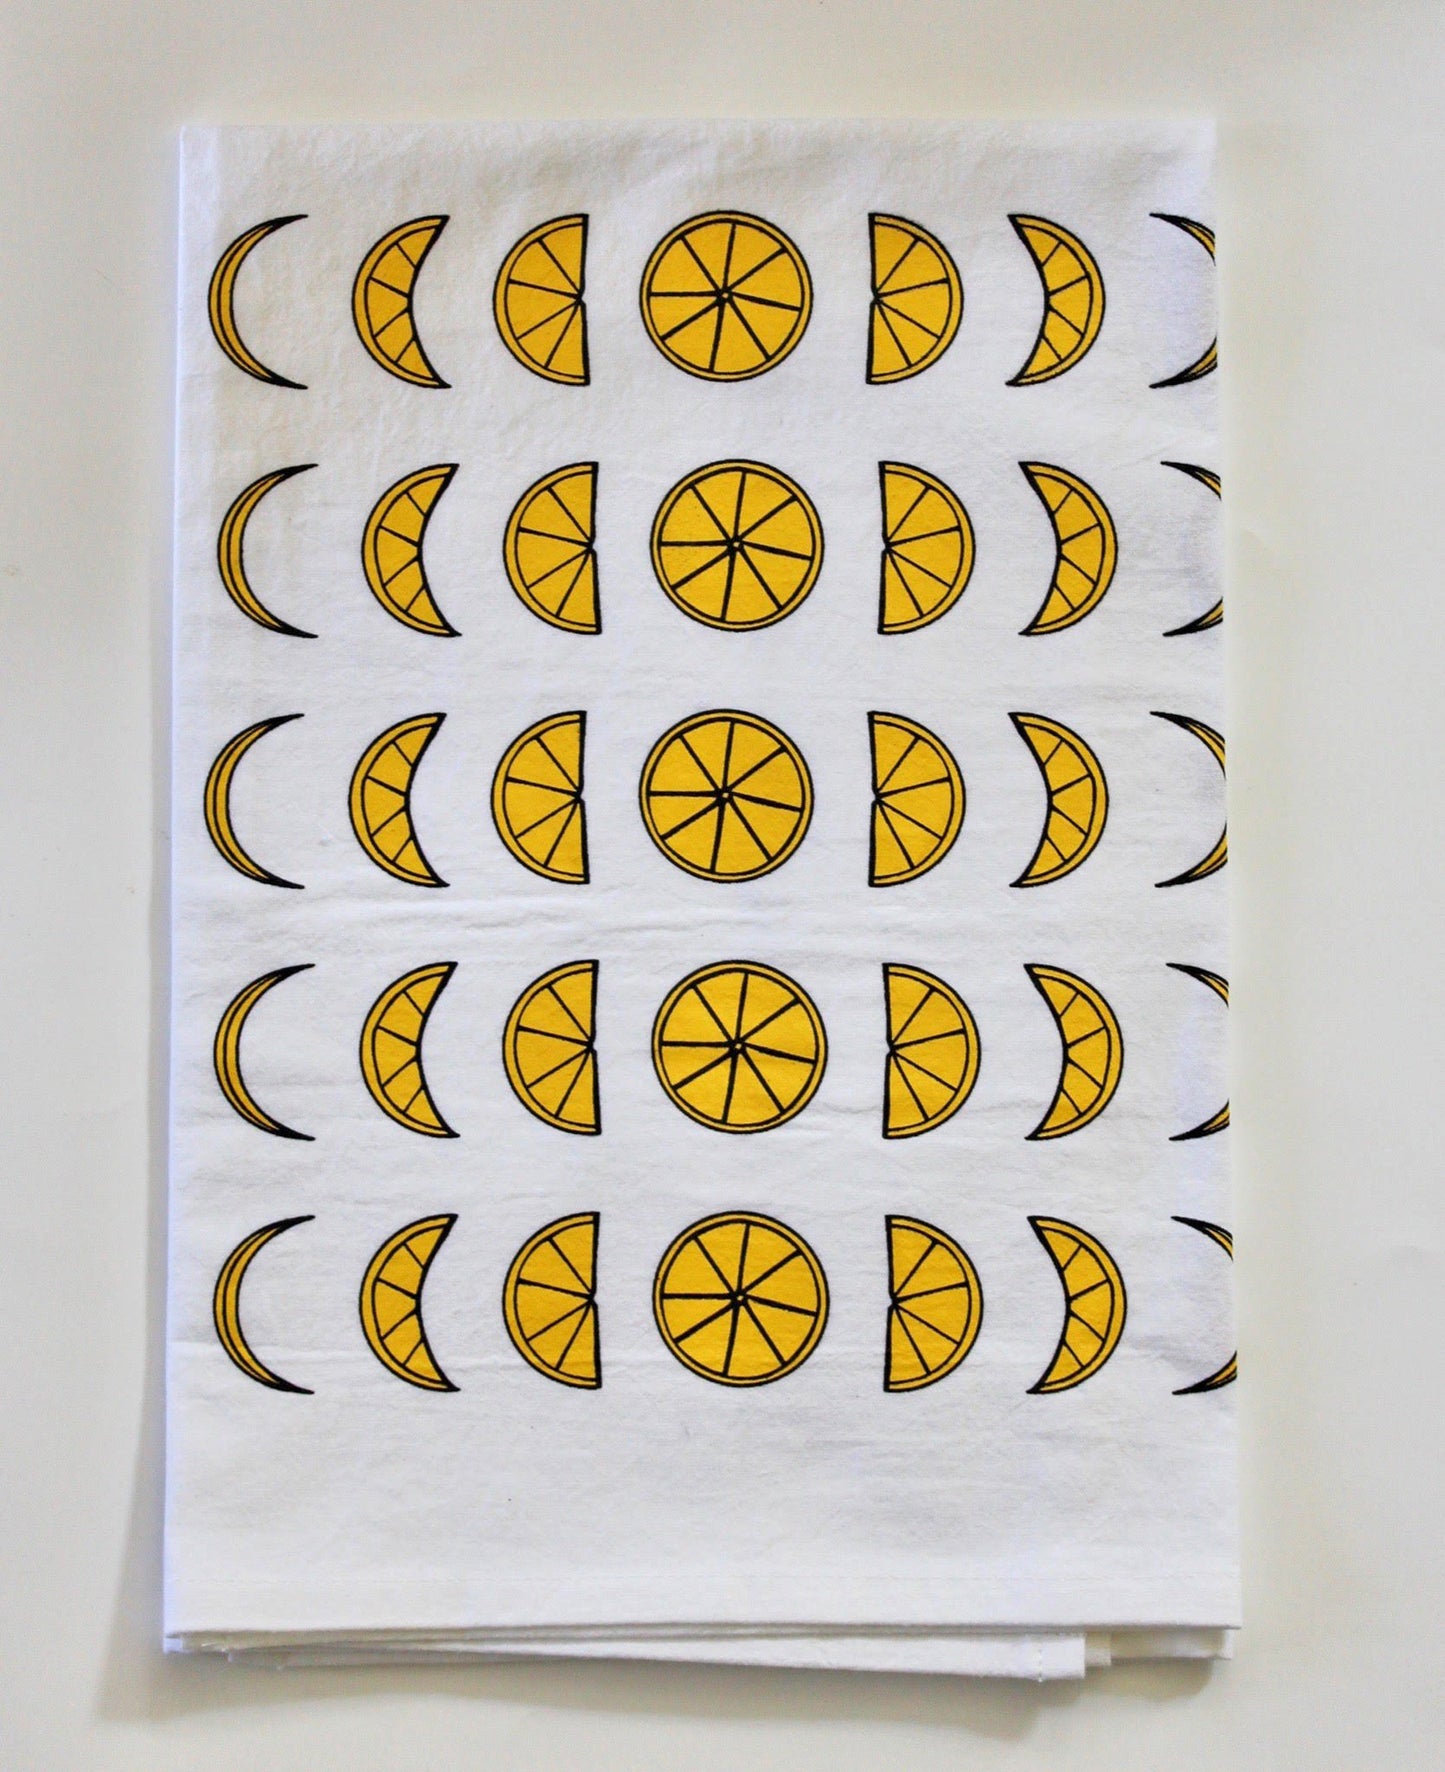 A white tea towel with a lemon moon phase design